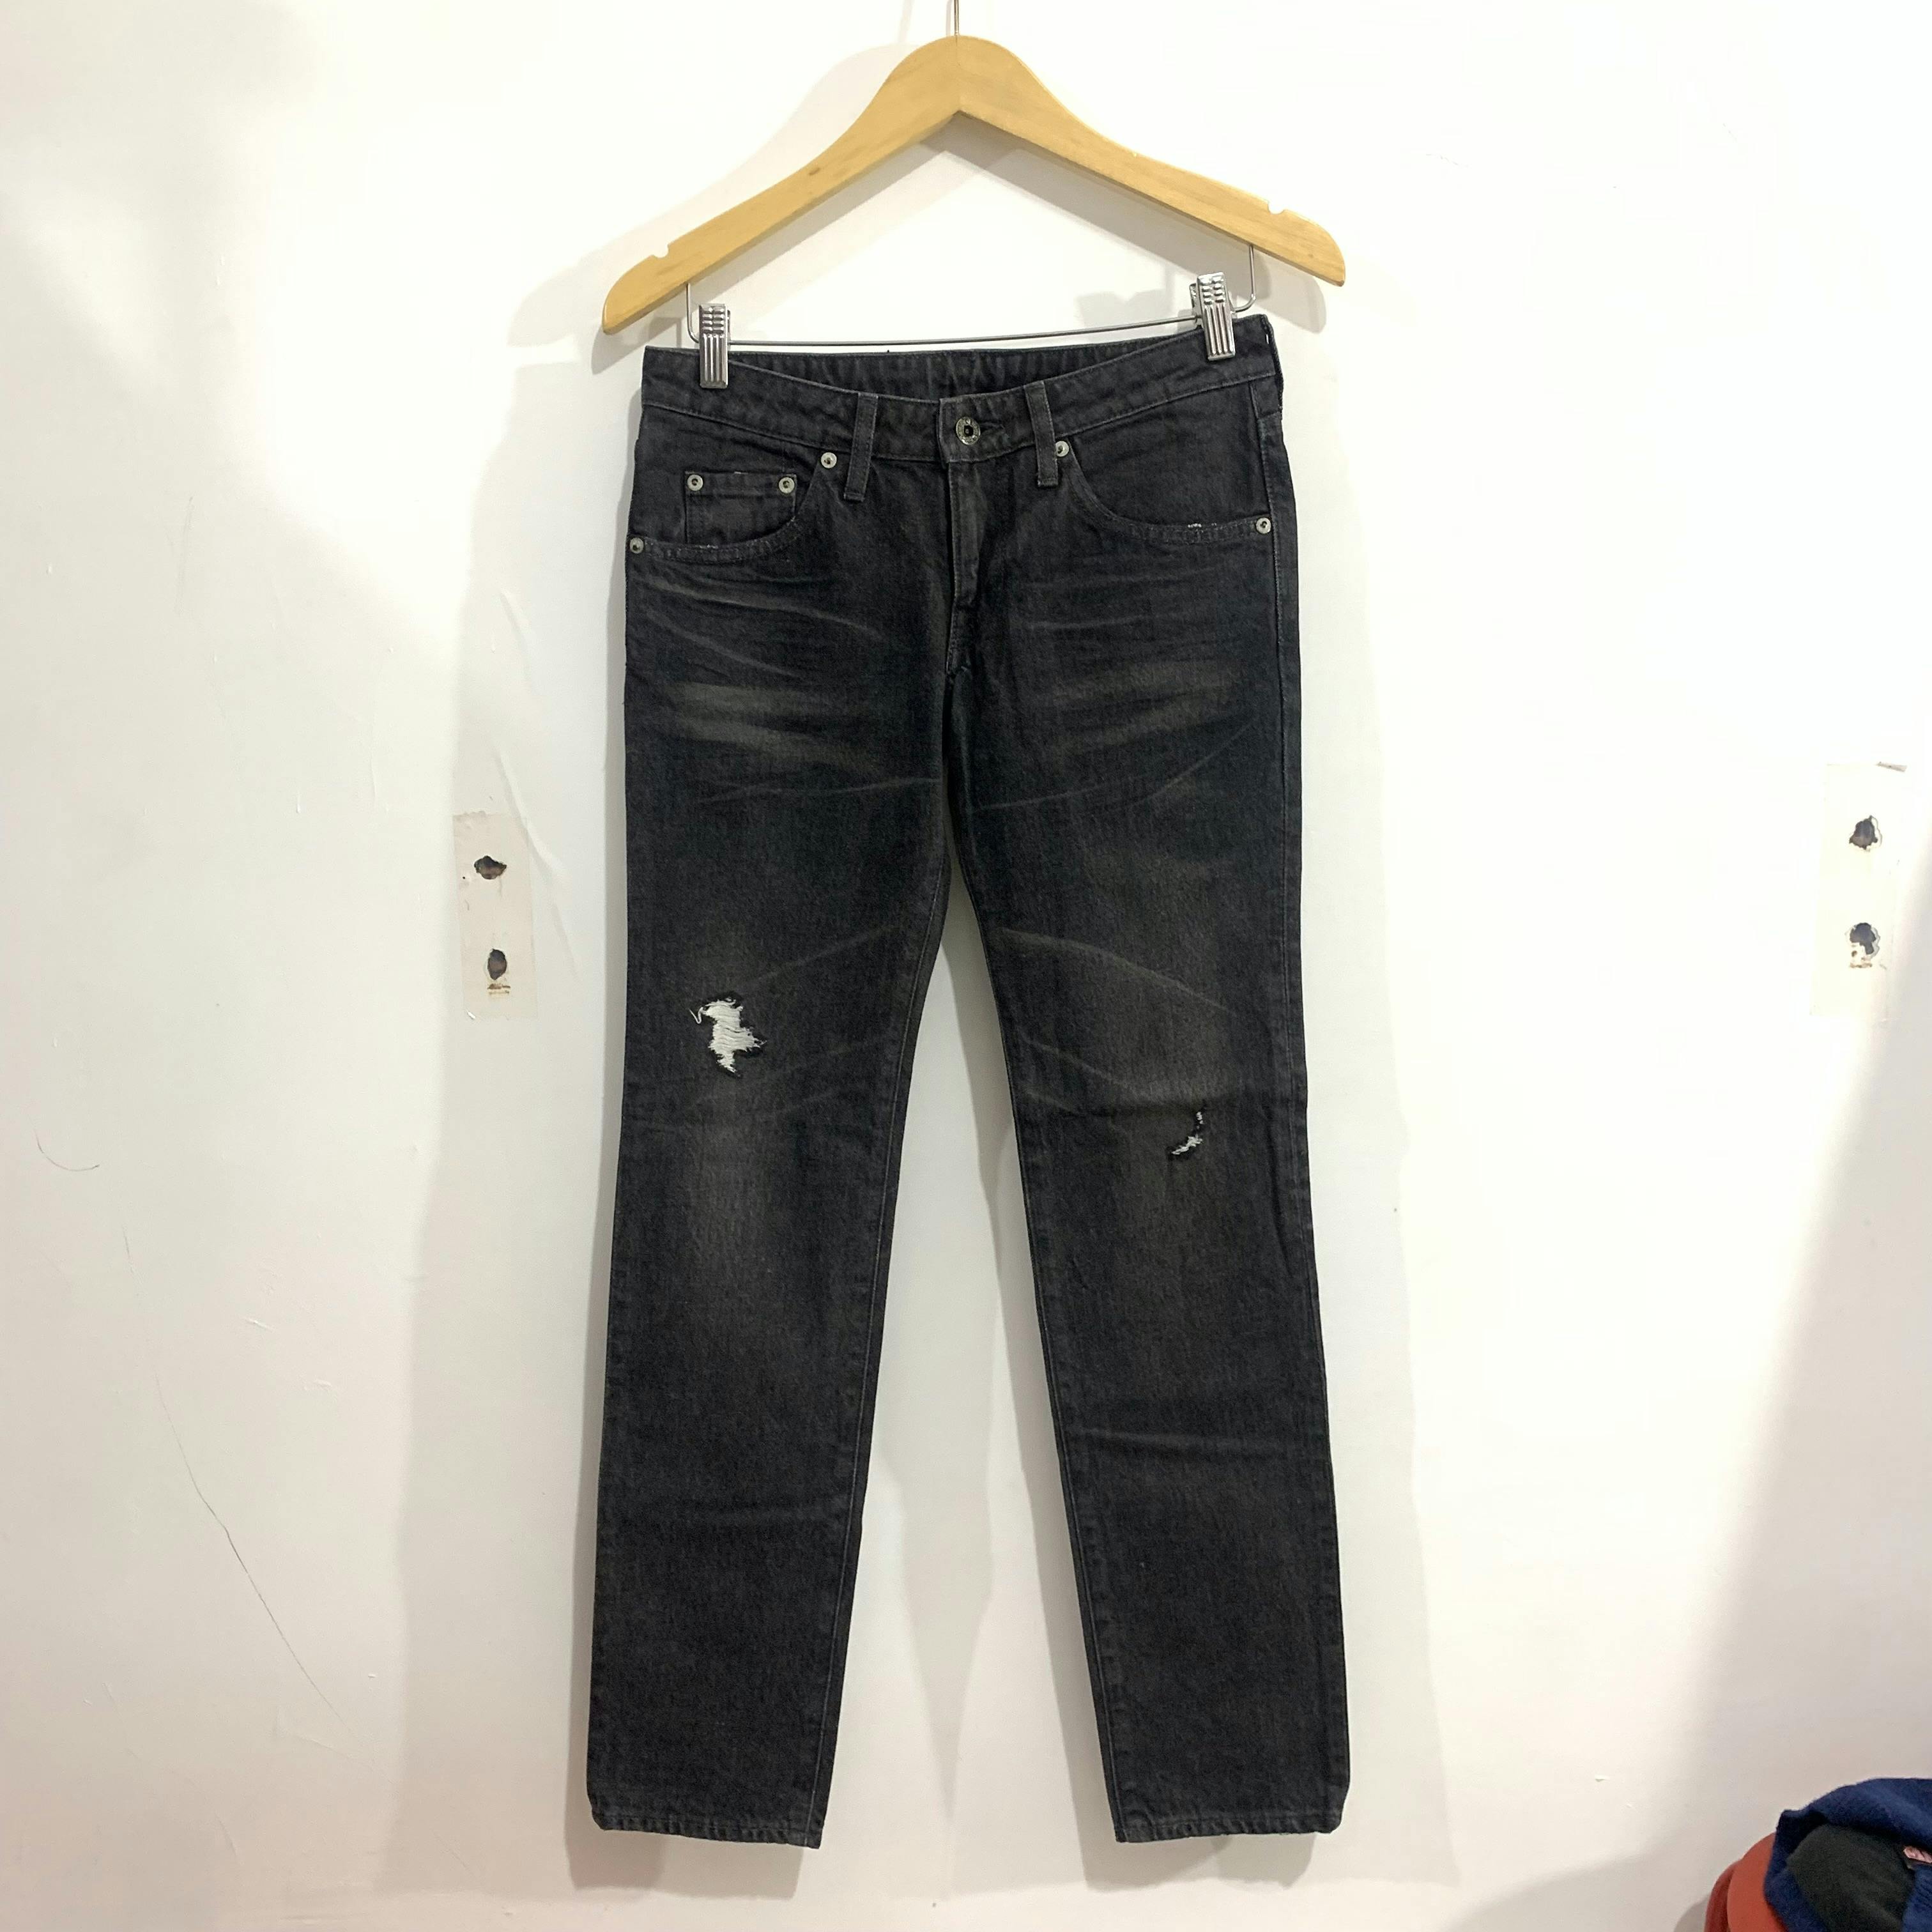 Bape x Human Made Denim Jeans Pants - 2